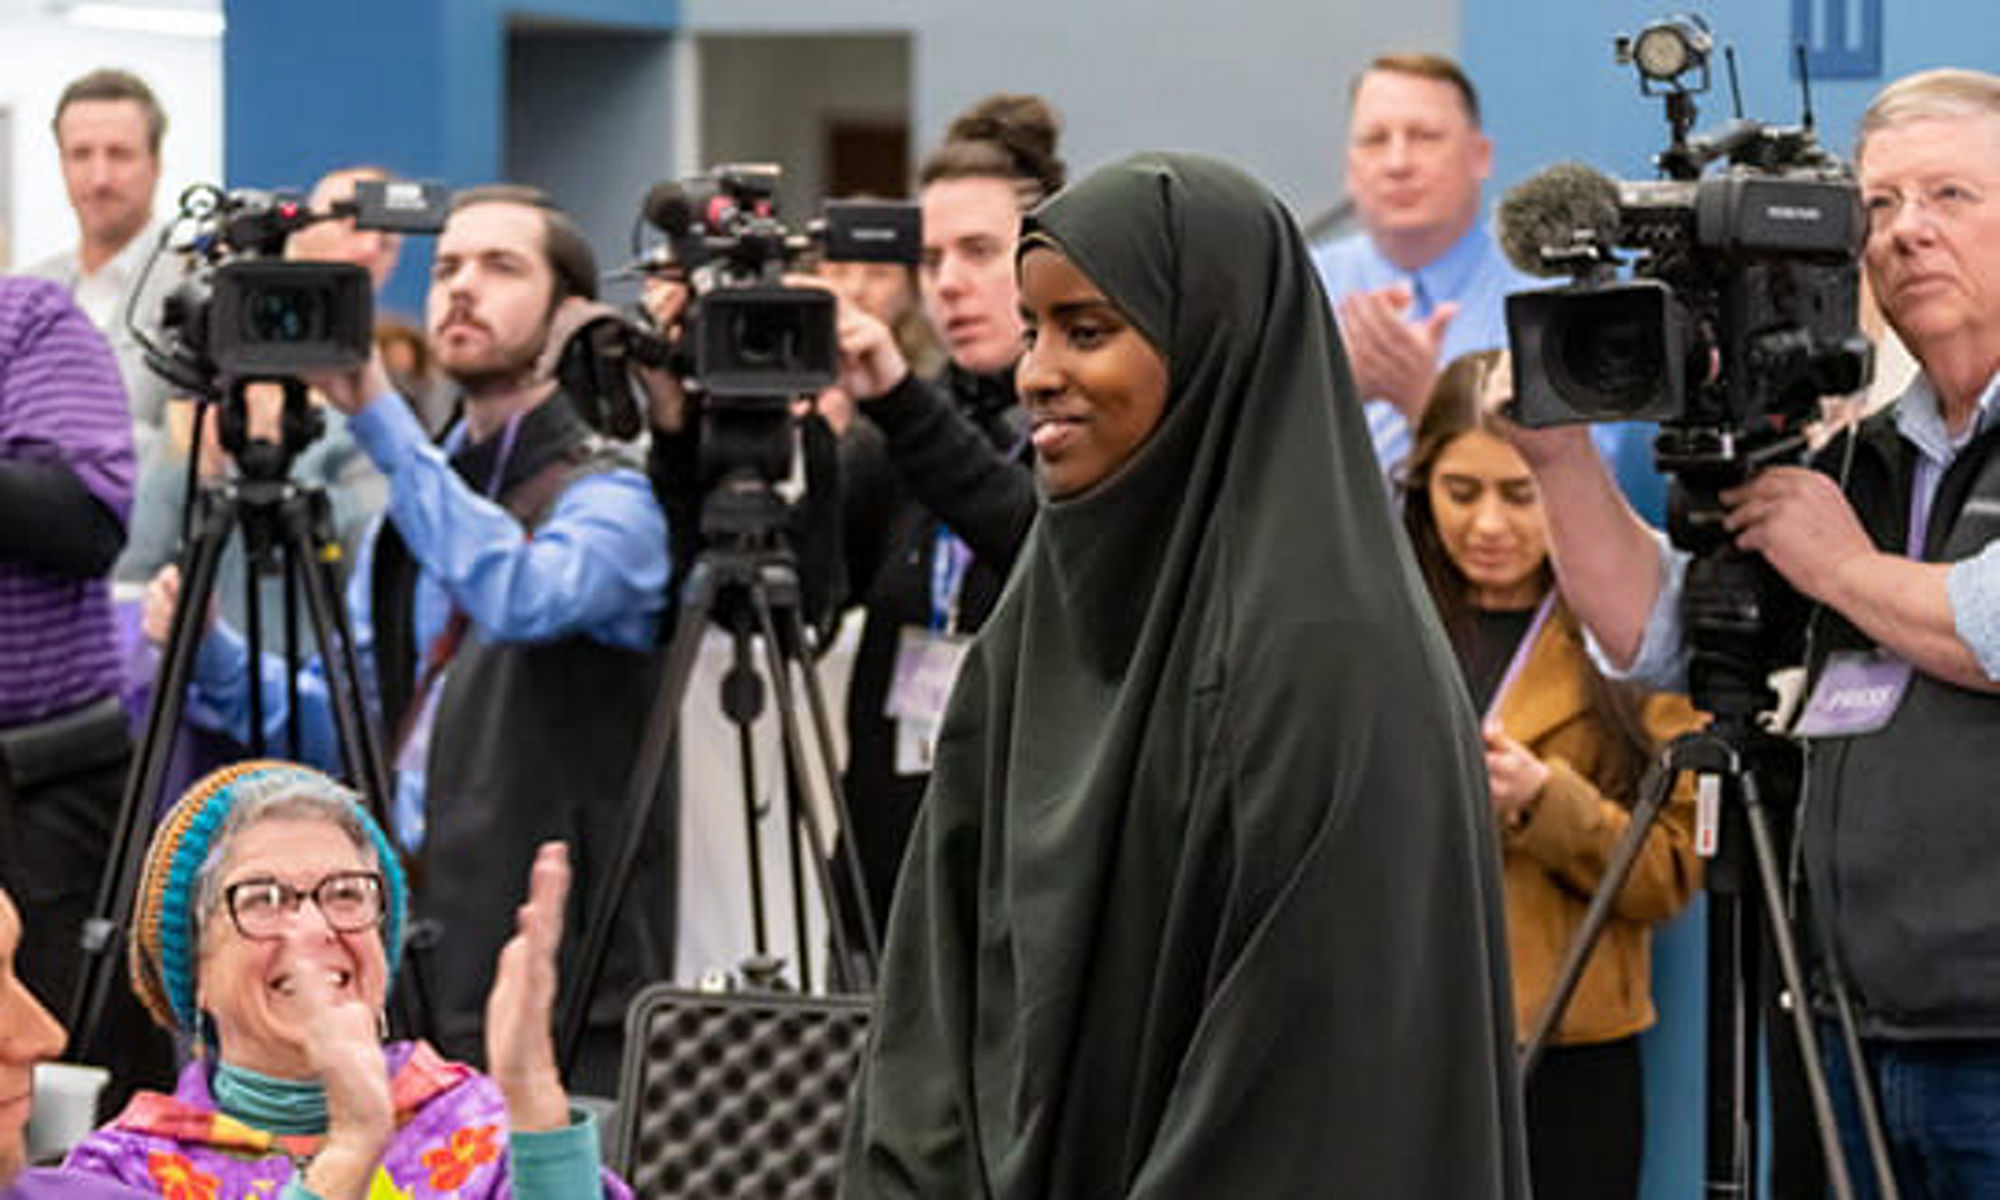 Smiling Muslim woman walks in ceremony